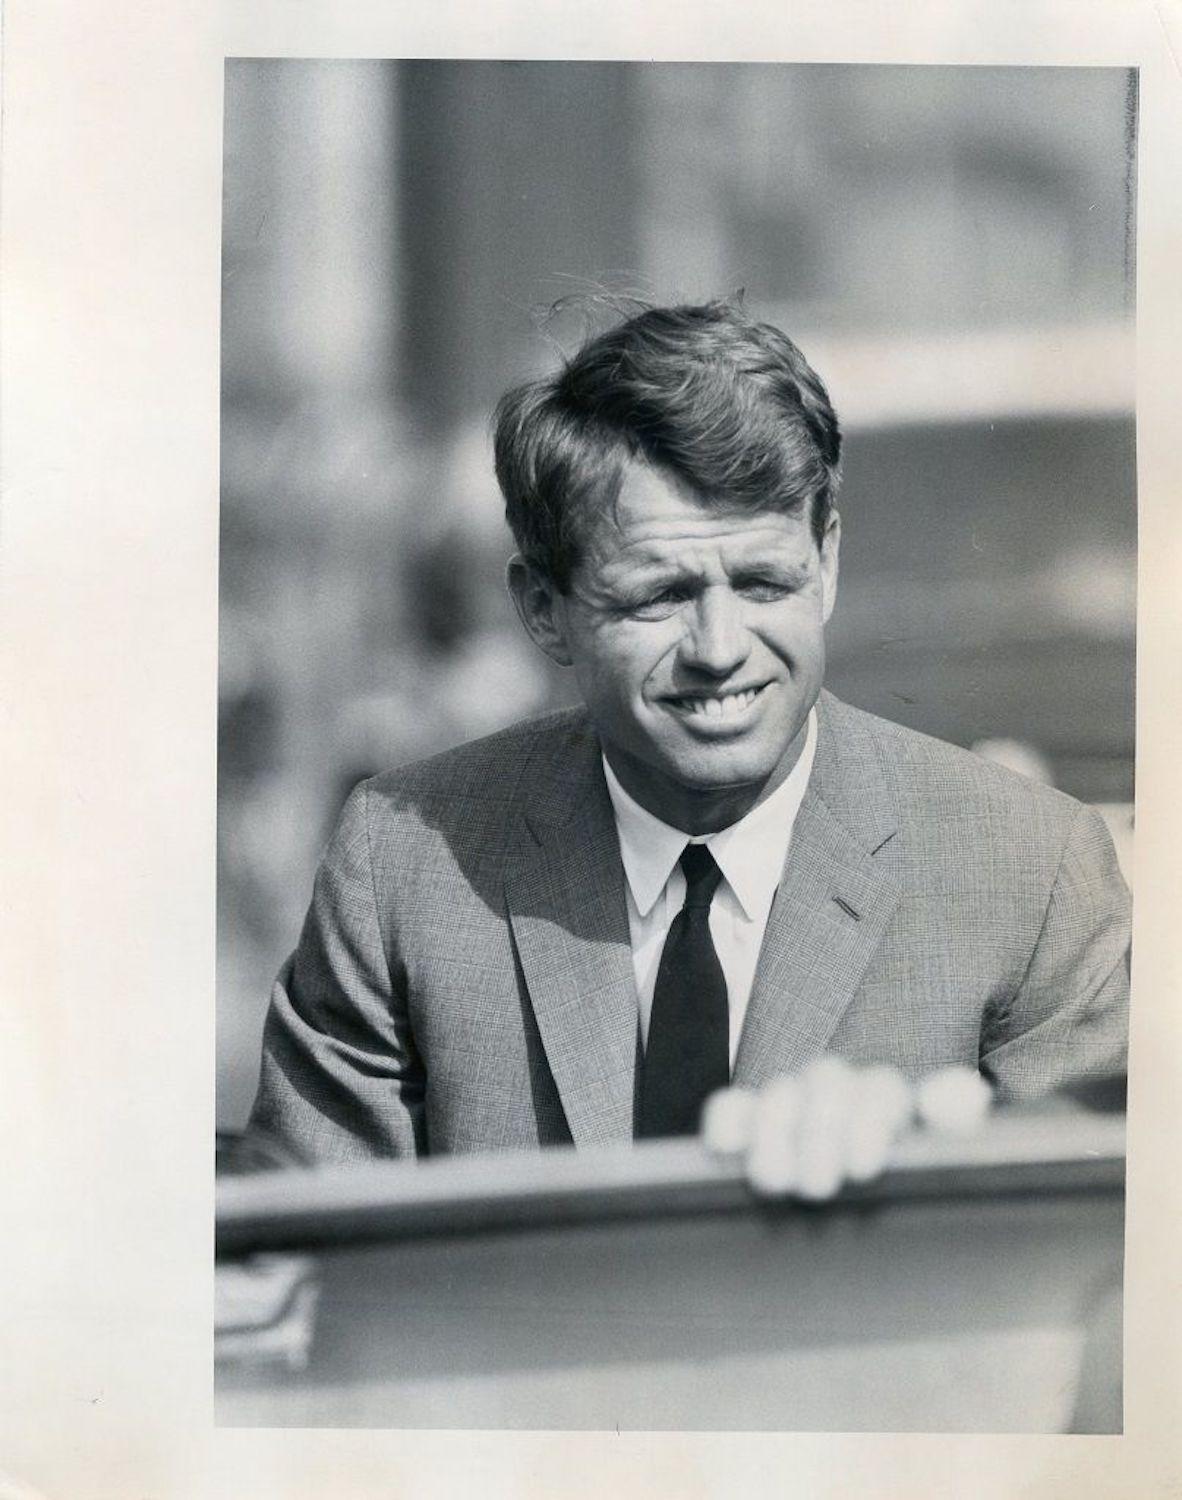 Henry Grossman Black and White Photograph - Portrait of Robert Kennedy - Press Photo by Robert Kennedy - 1968